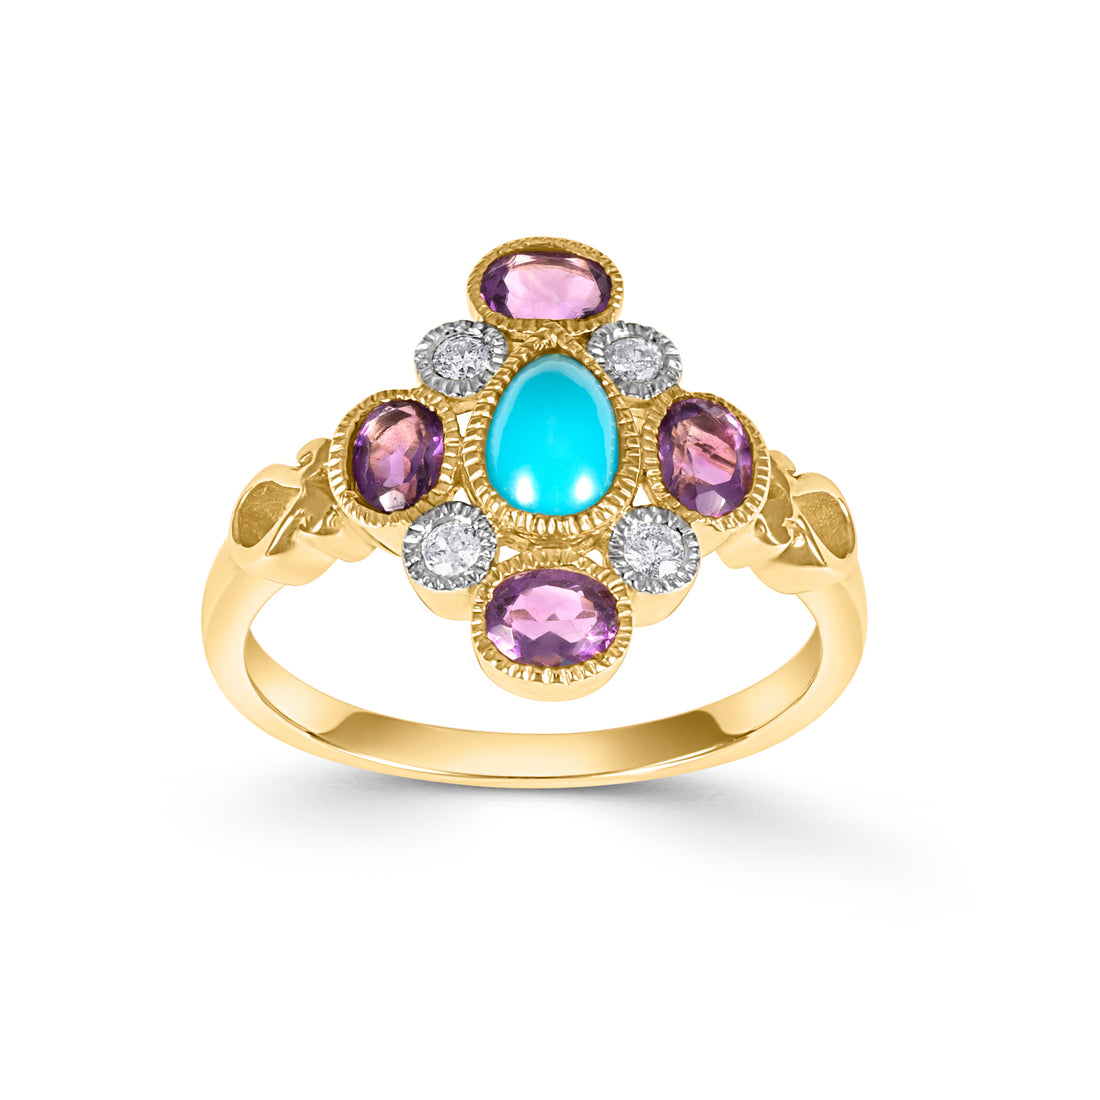 9ct Gold Turquoise, Amethyst and Diamond Ring - Robert Anthony Jewellers, Edinburgh